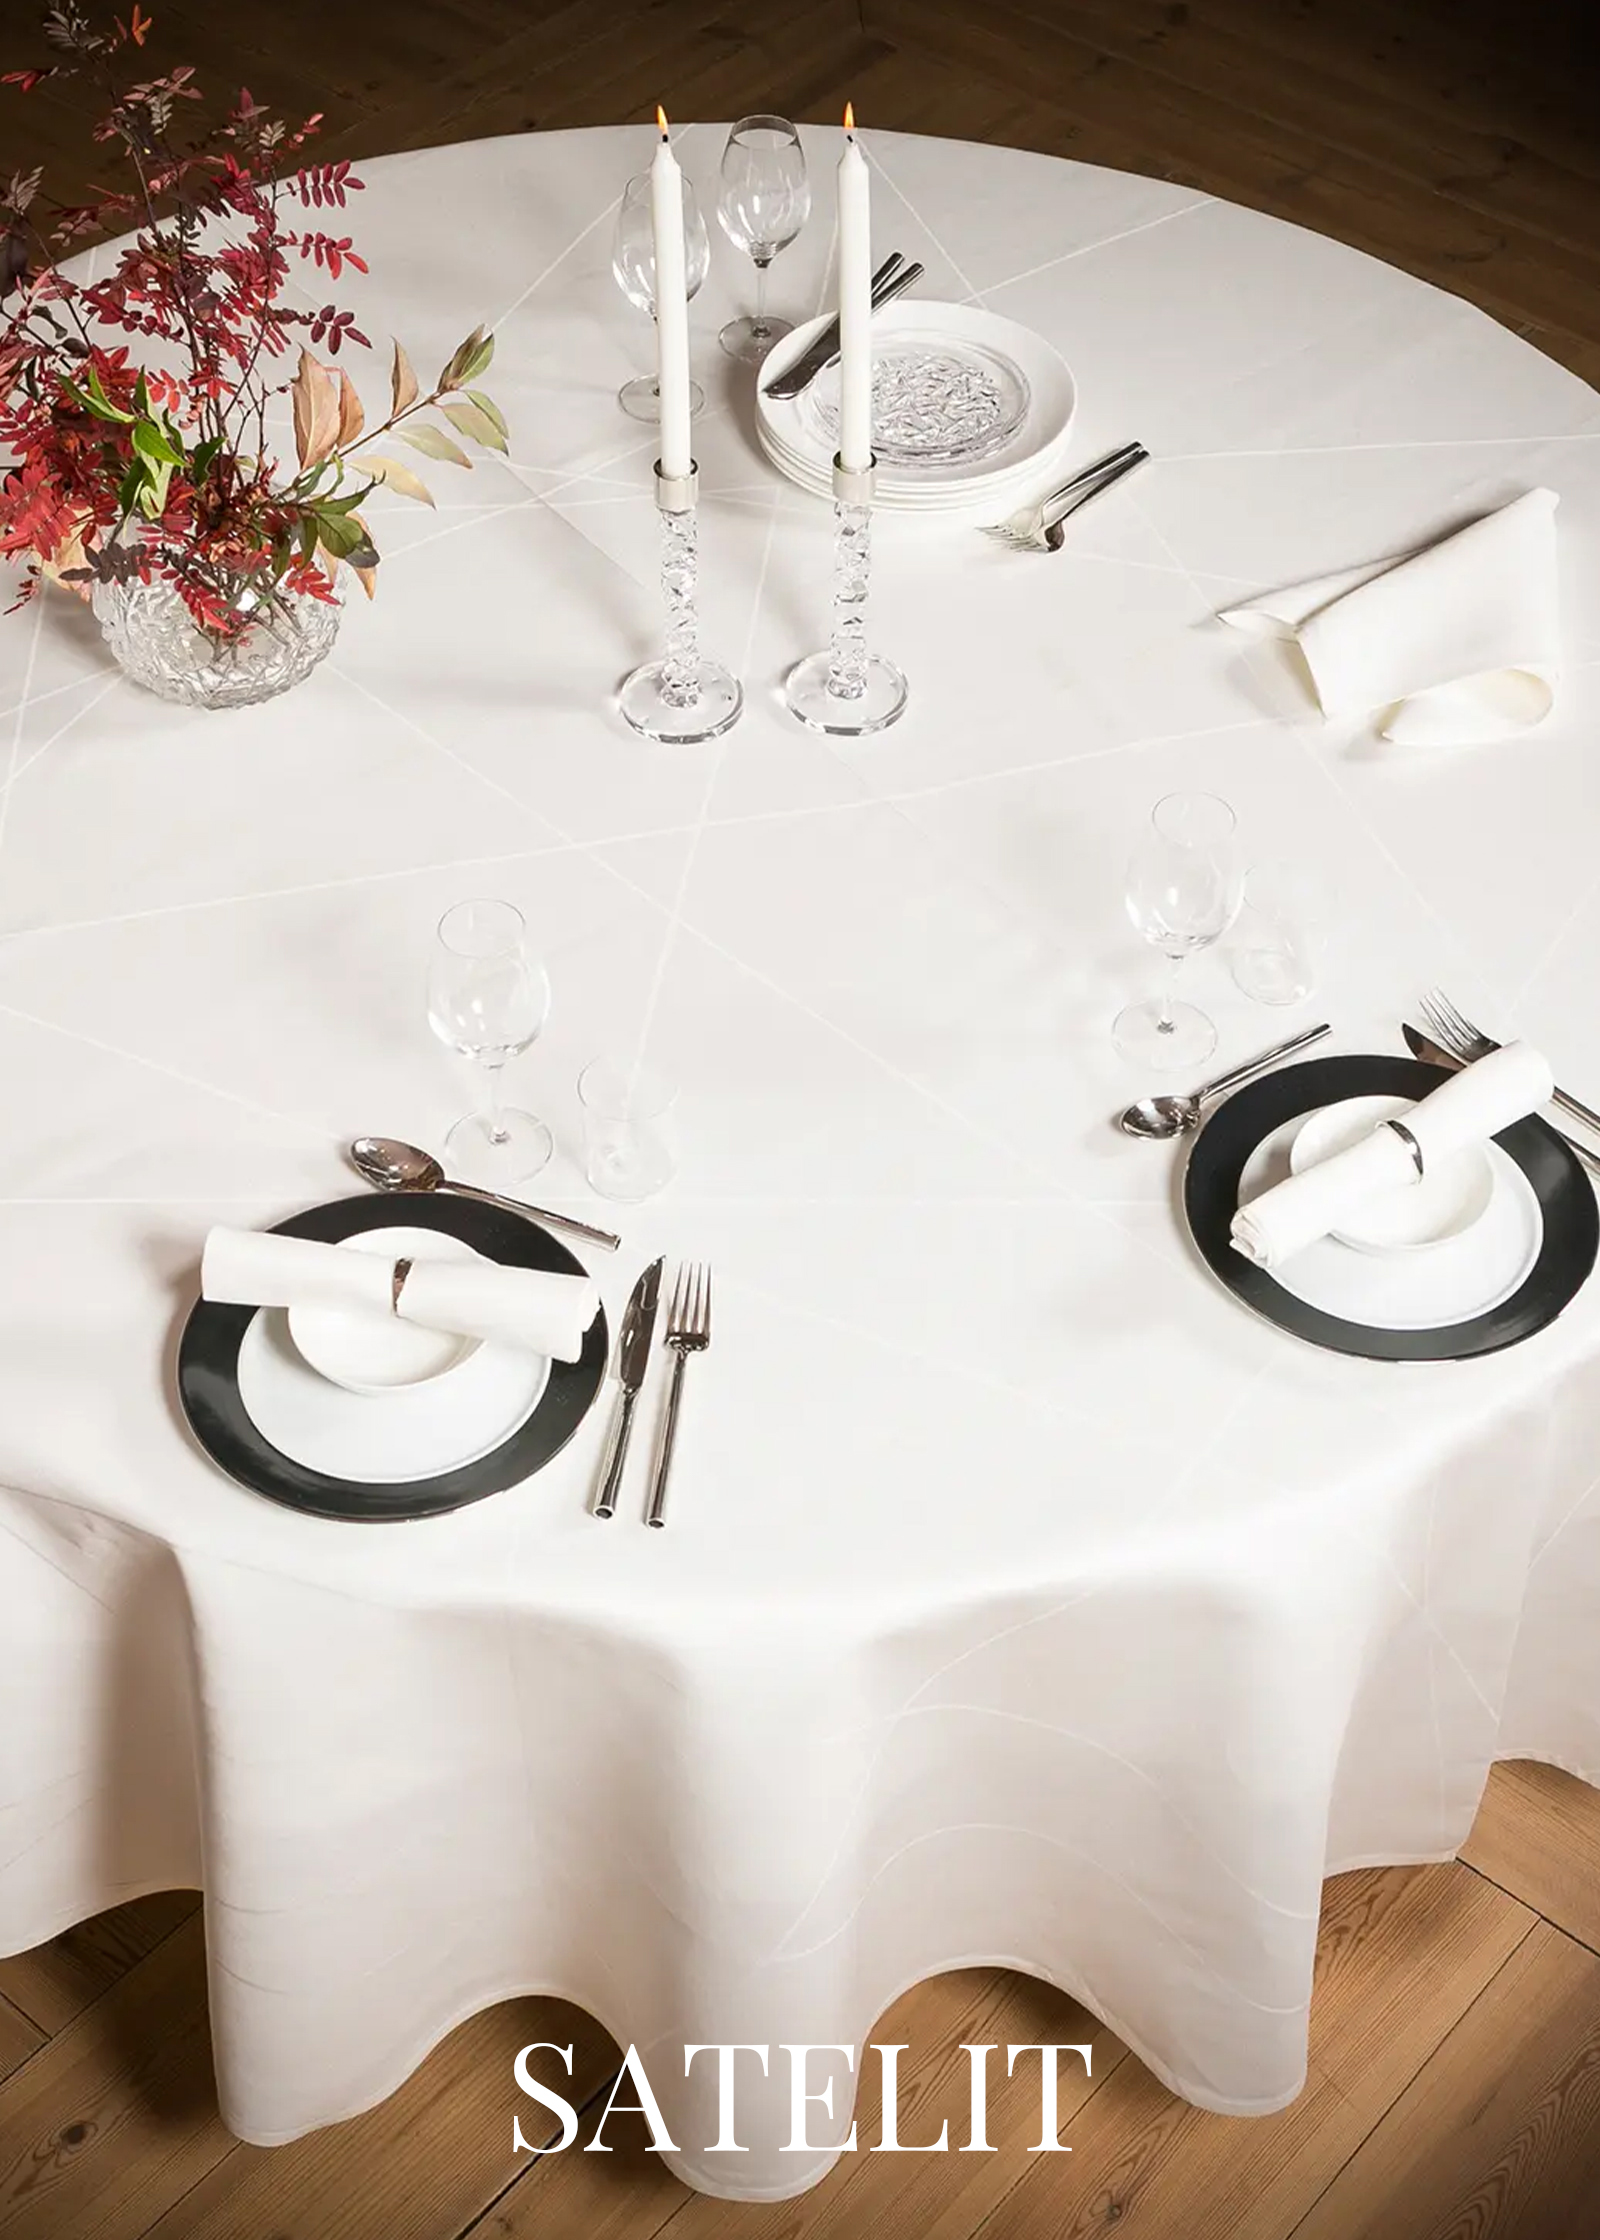 Custom-made-side-satellite - Table setting of a white round table cloth made by Klässbols Linneväveri